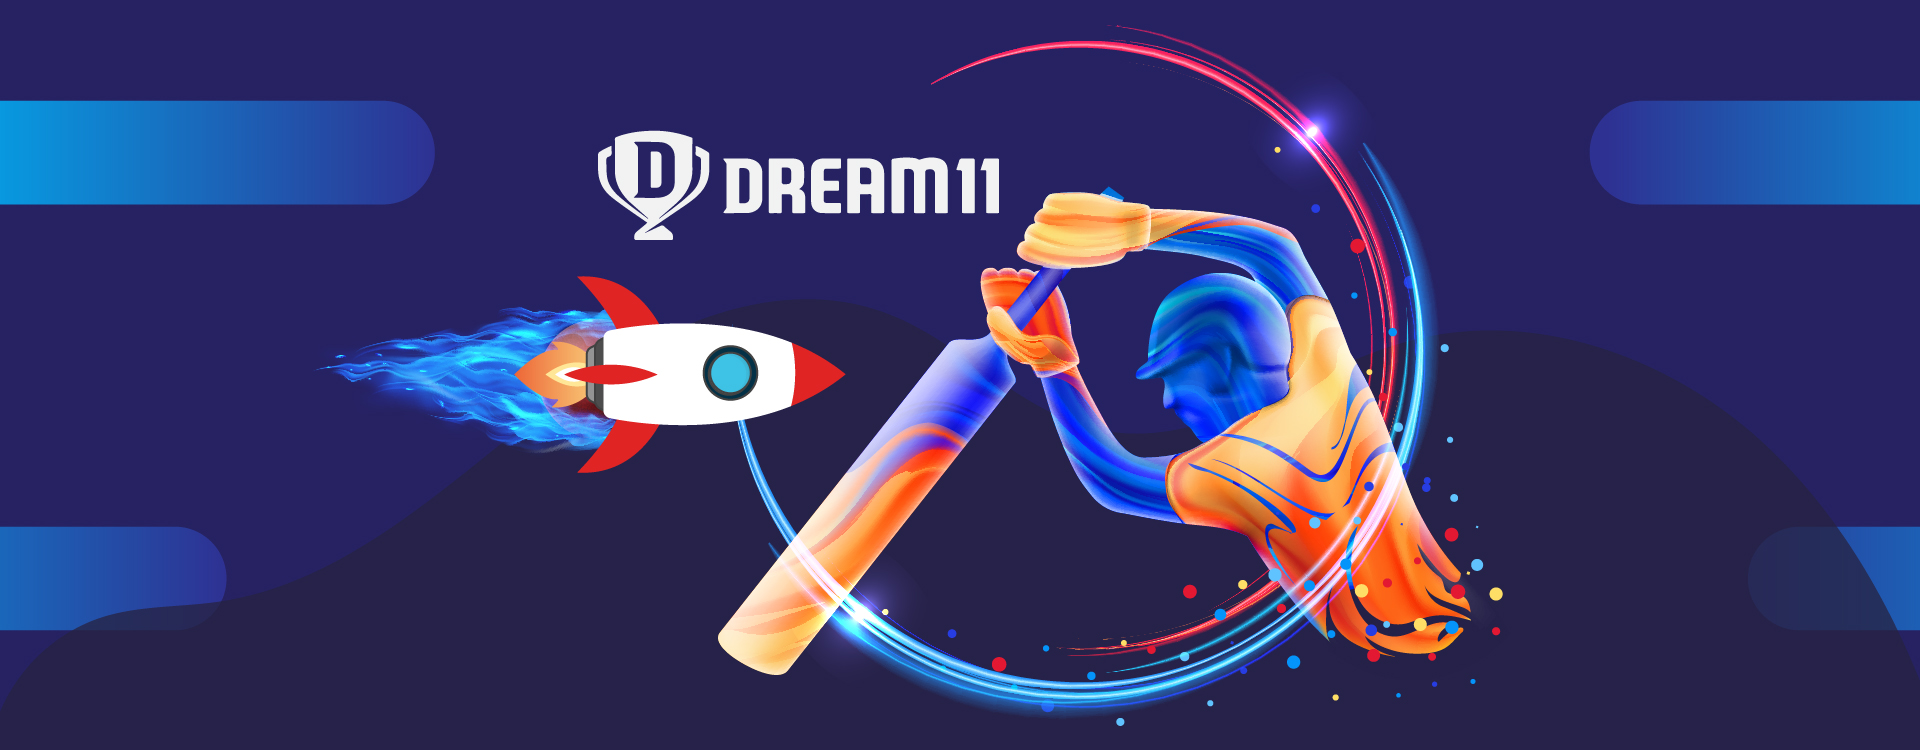 Dream11 IPL sponsor Fantasy partner IPL 2021